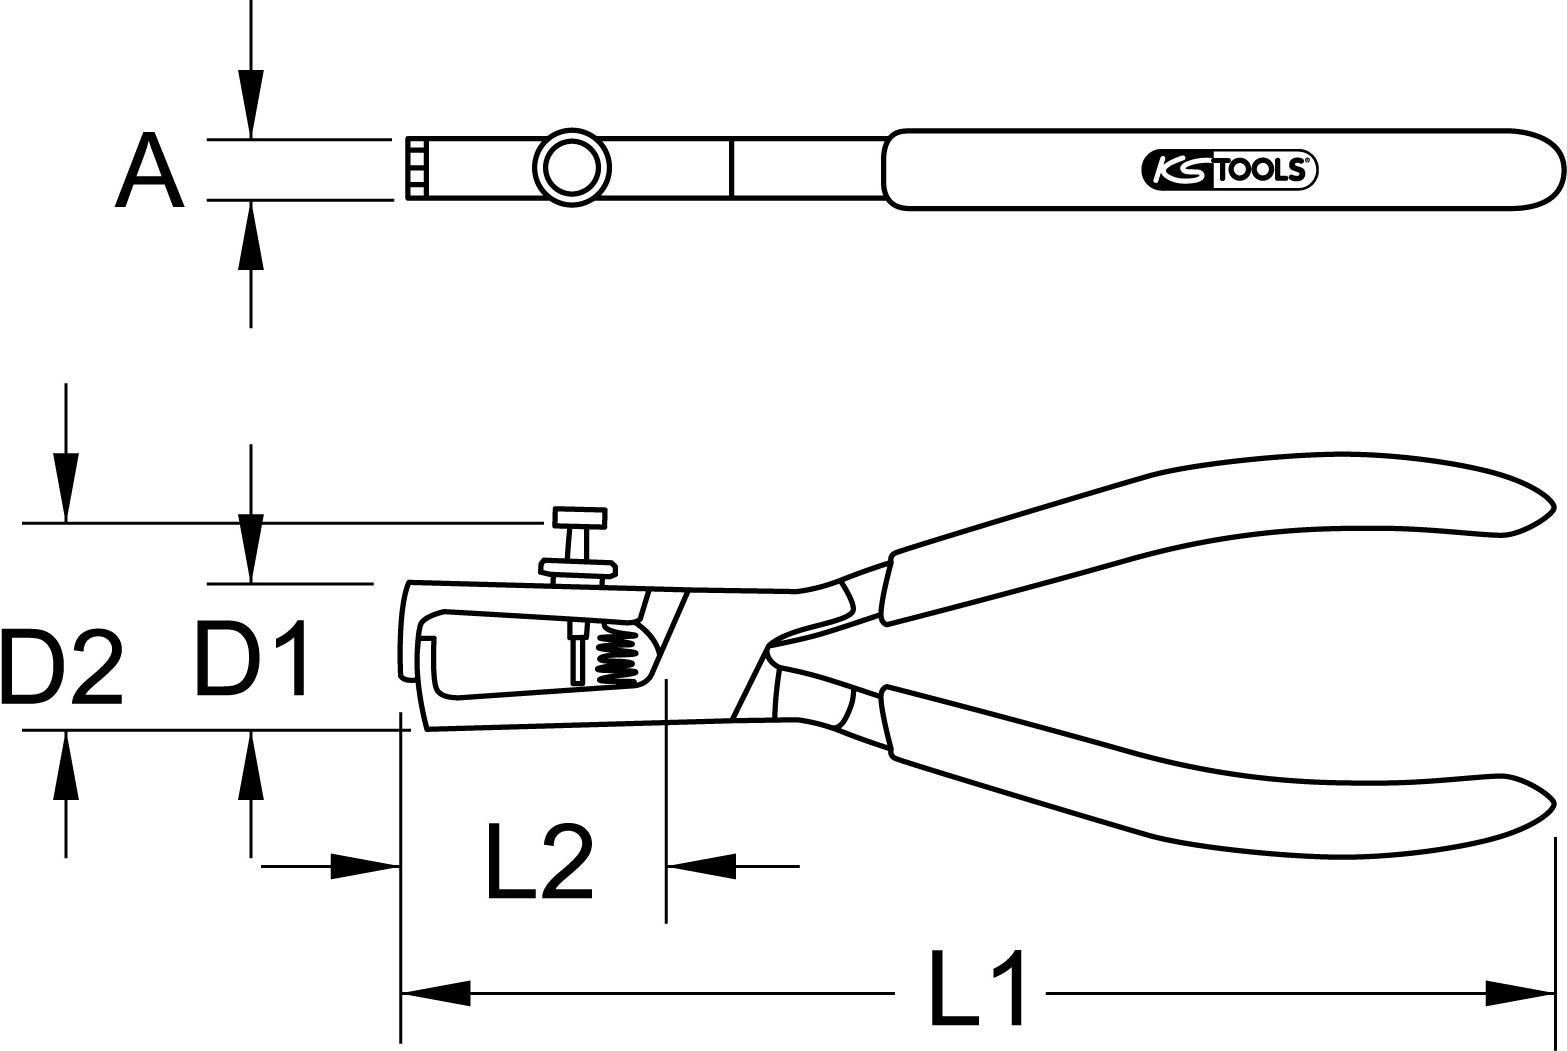 KS TOOLS Werkzeuge-Maschinen GmbH BERYLLIUMplus Abisolierzange 170 mm (962.0635)